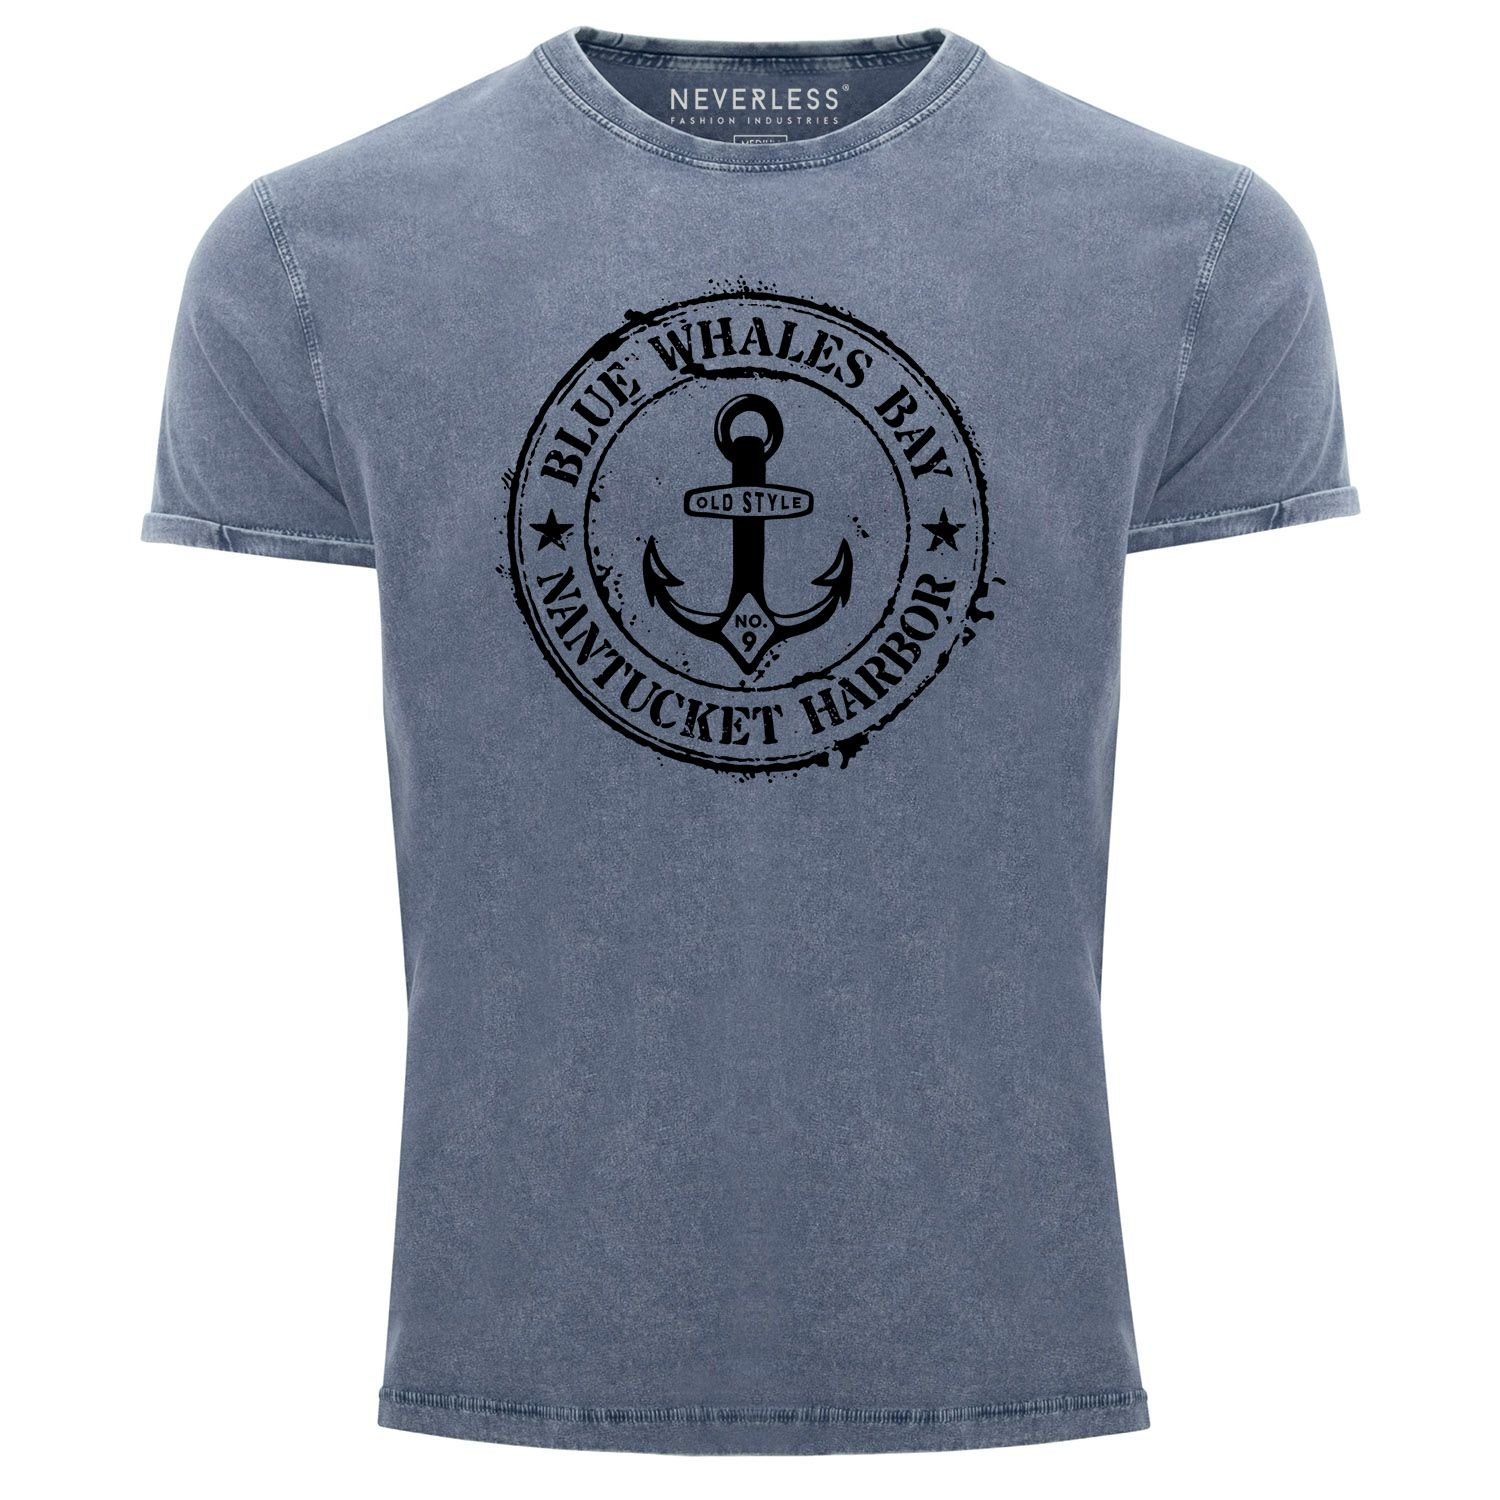 Neverless Print-Shirt Herren Vintage Shirt Anker Motiv maritim Retro Anchor Badge Vintage Printshirt Used Look Slim Fit Neverless® mit Print blau